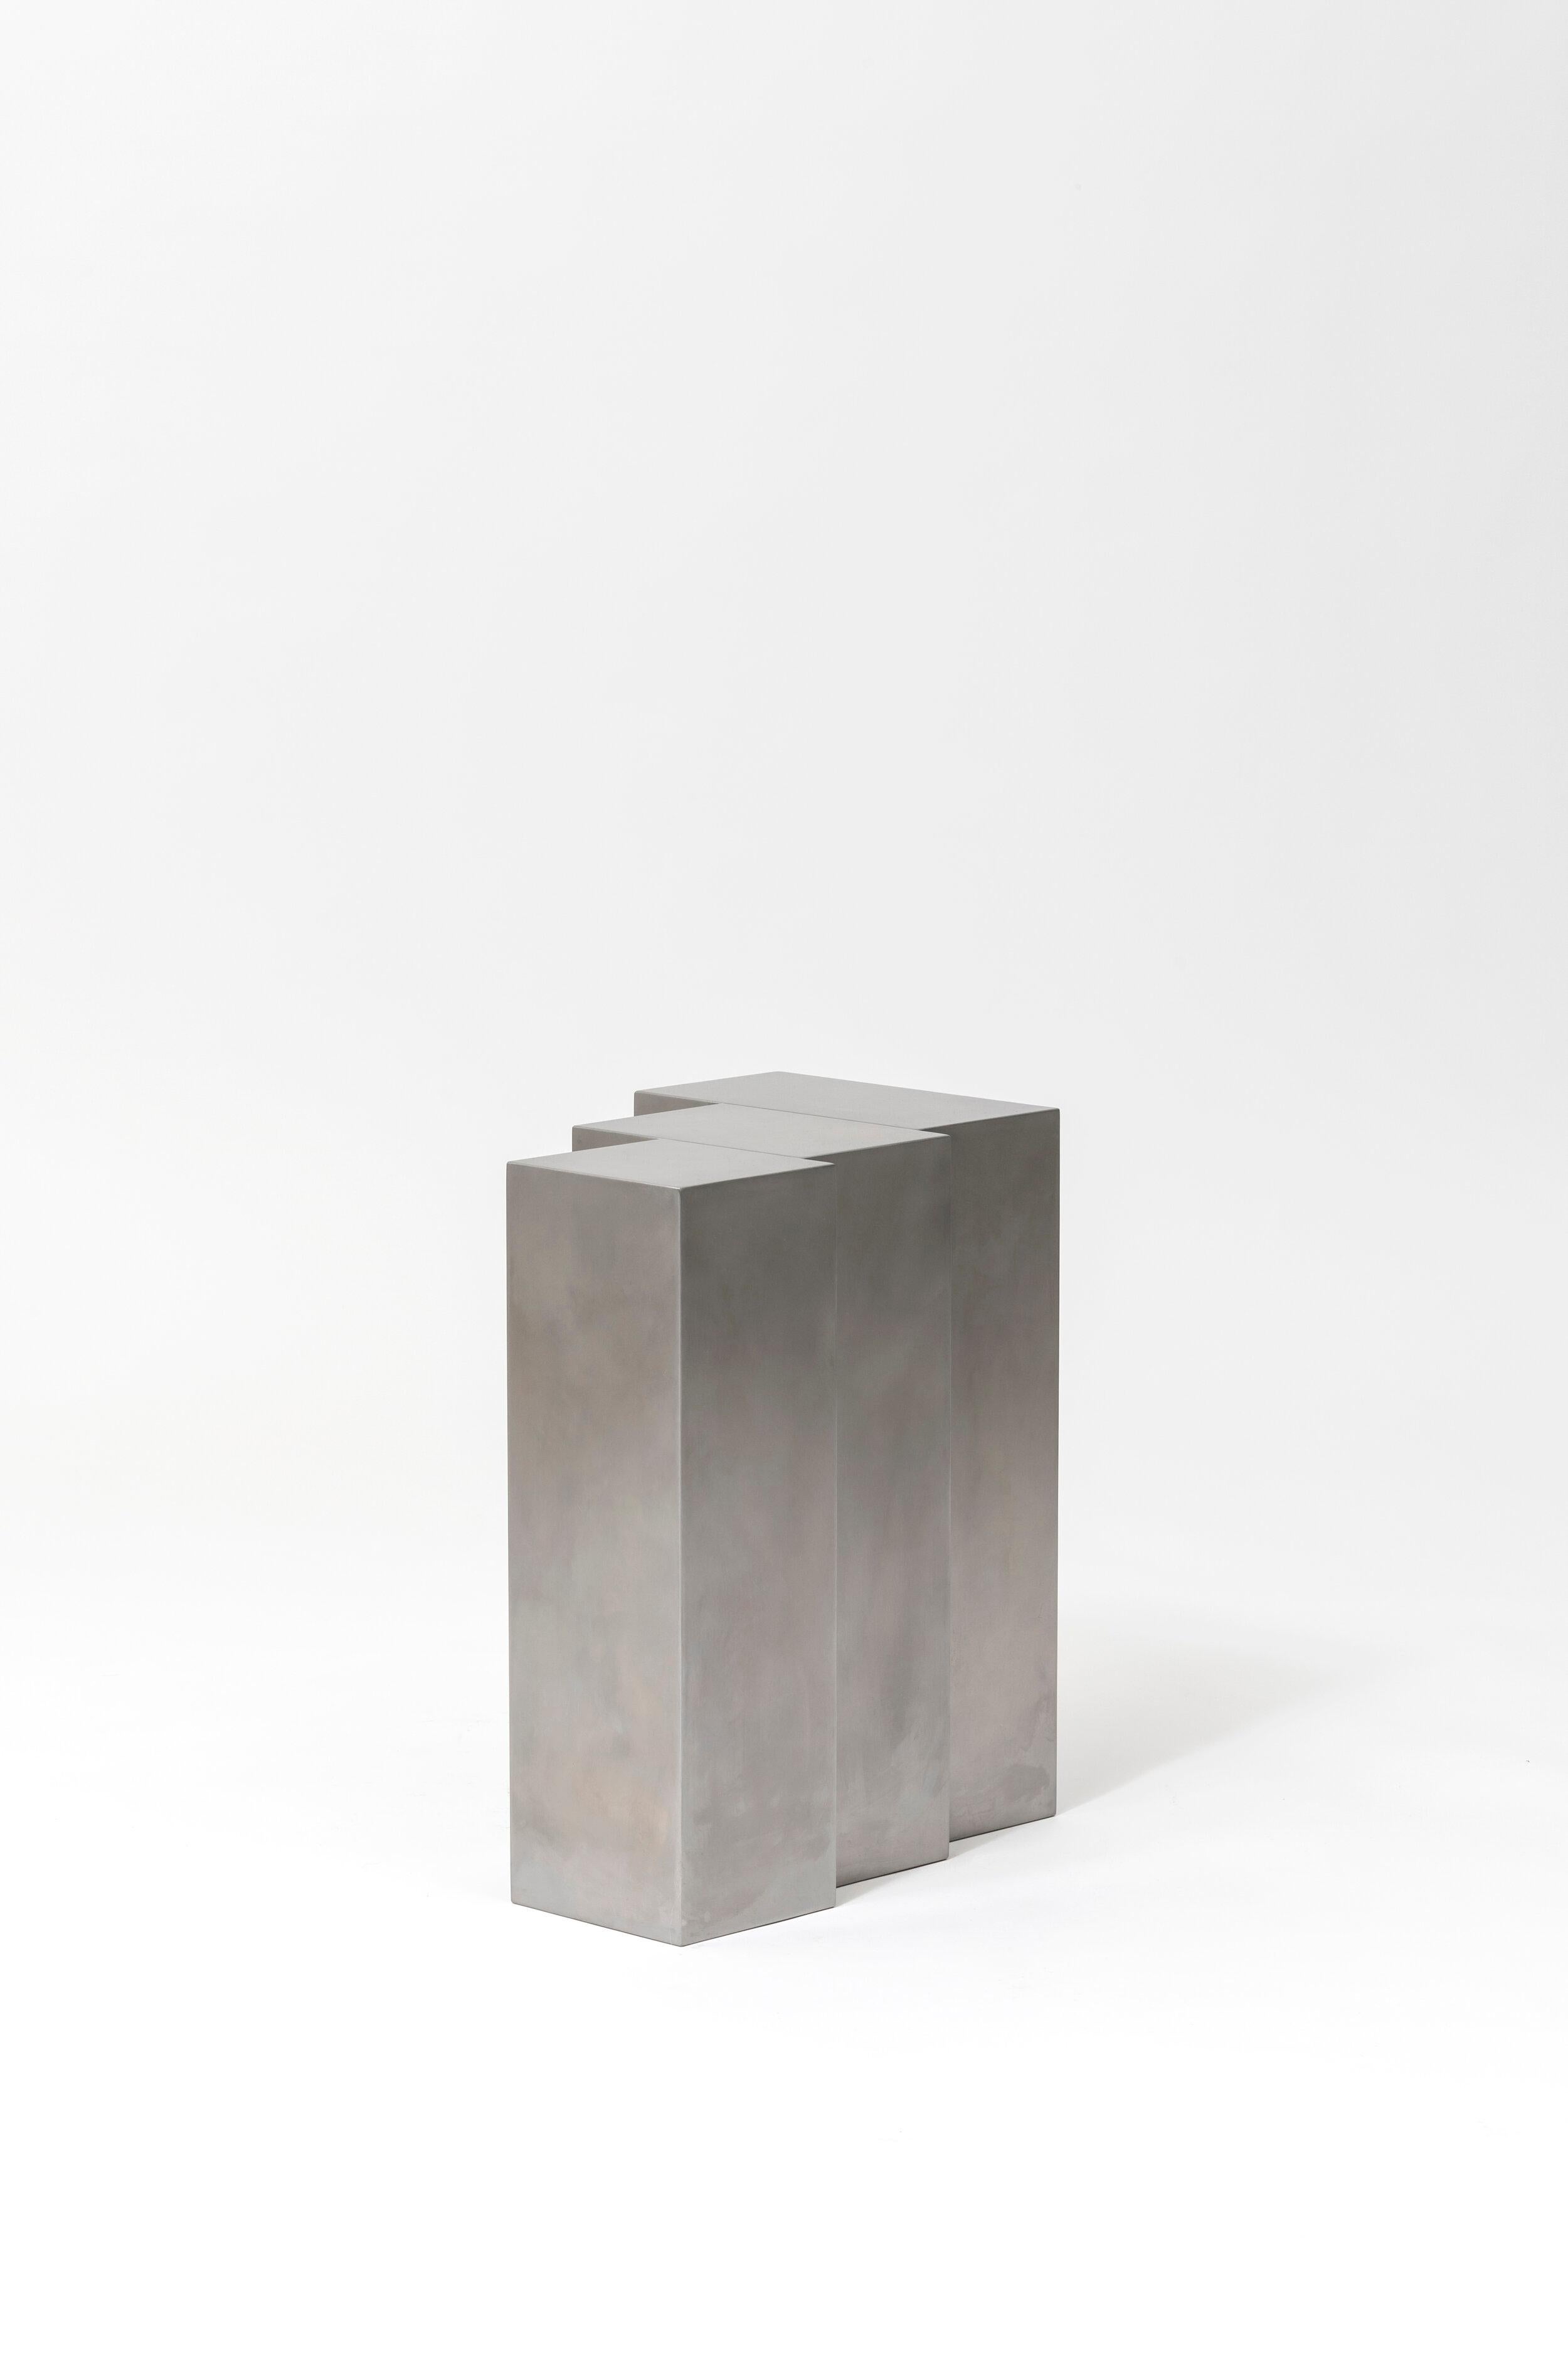 Korean Layered Steel Seat XIV by Hyungshin Hwang For Sale